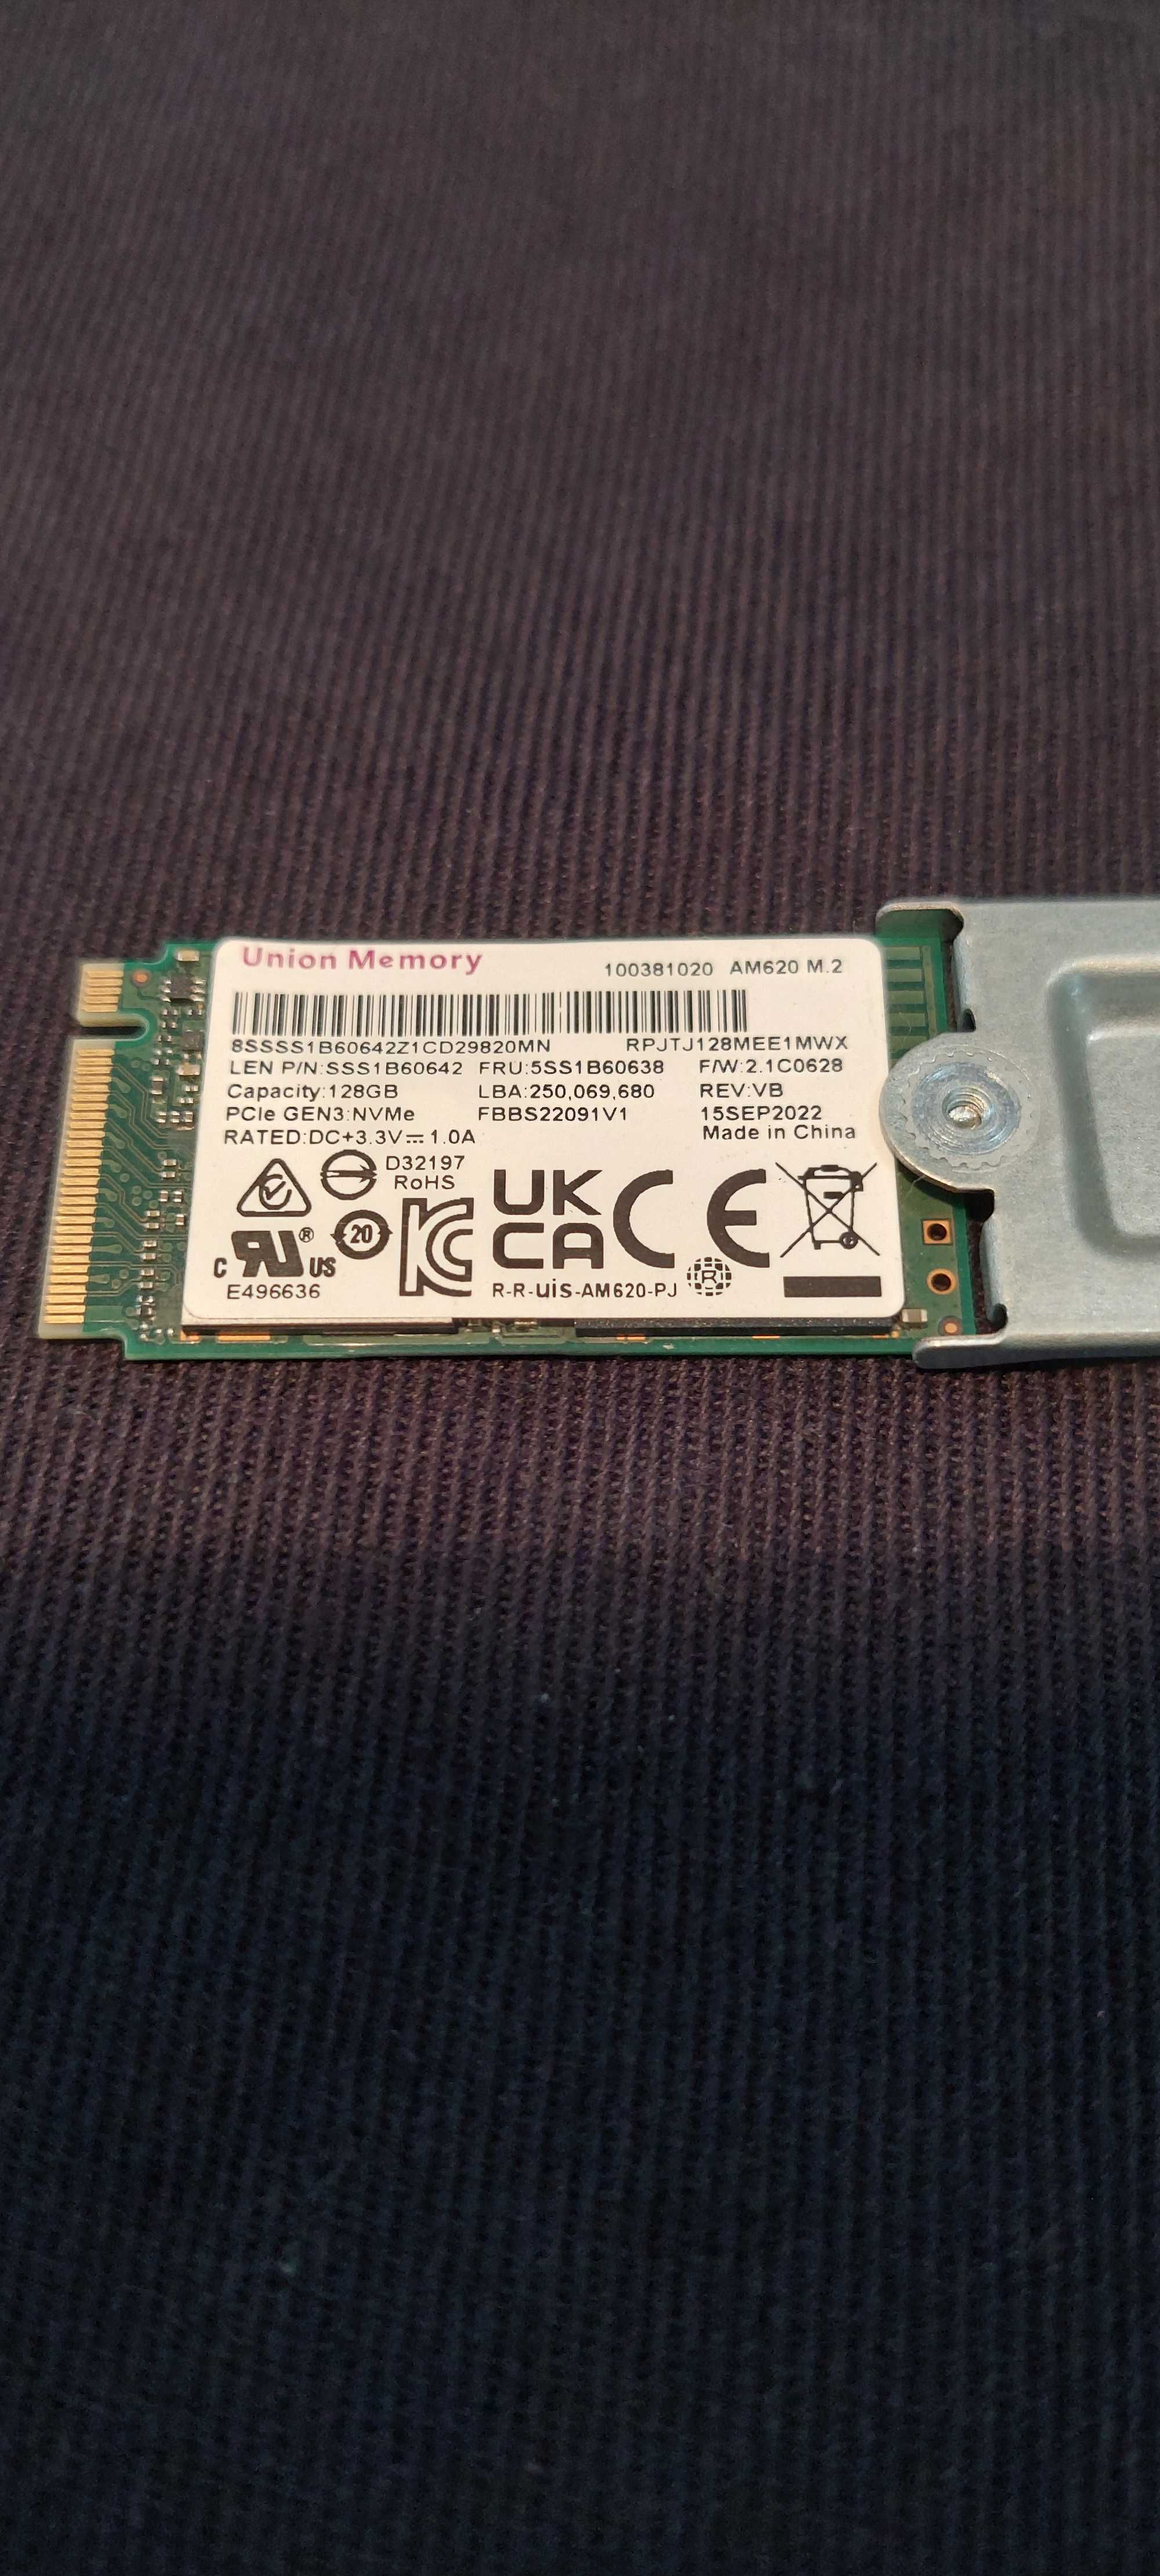 Union Memory 128GB M.2 PCI-e NVME SSD 42mm 2242 Form Factor M Key